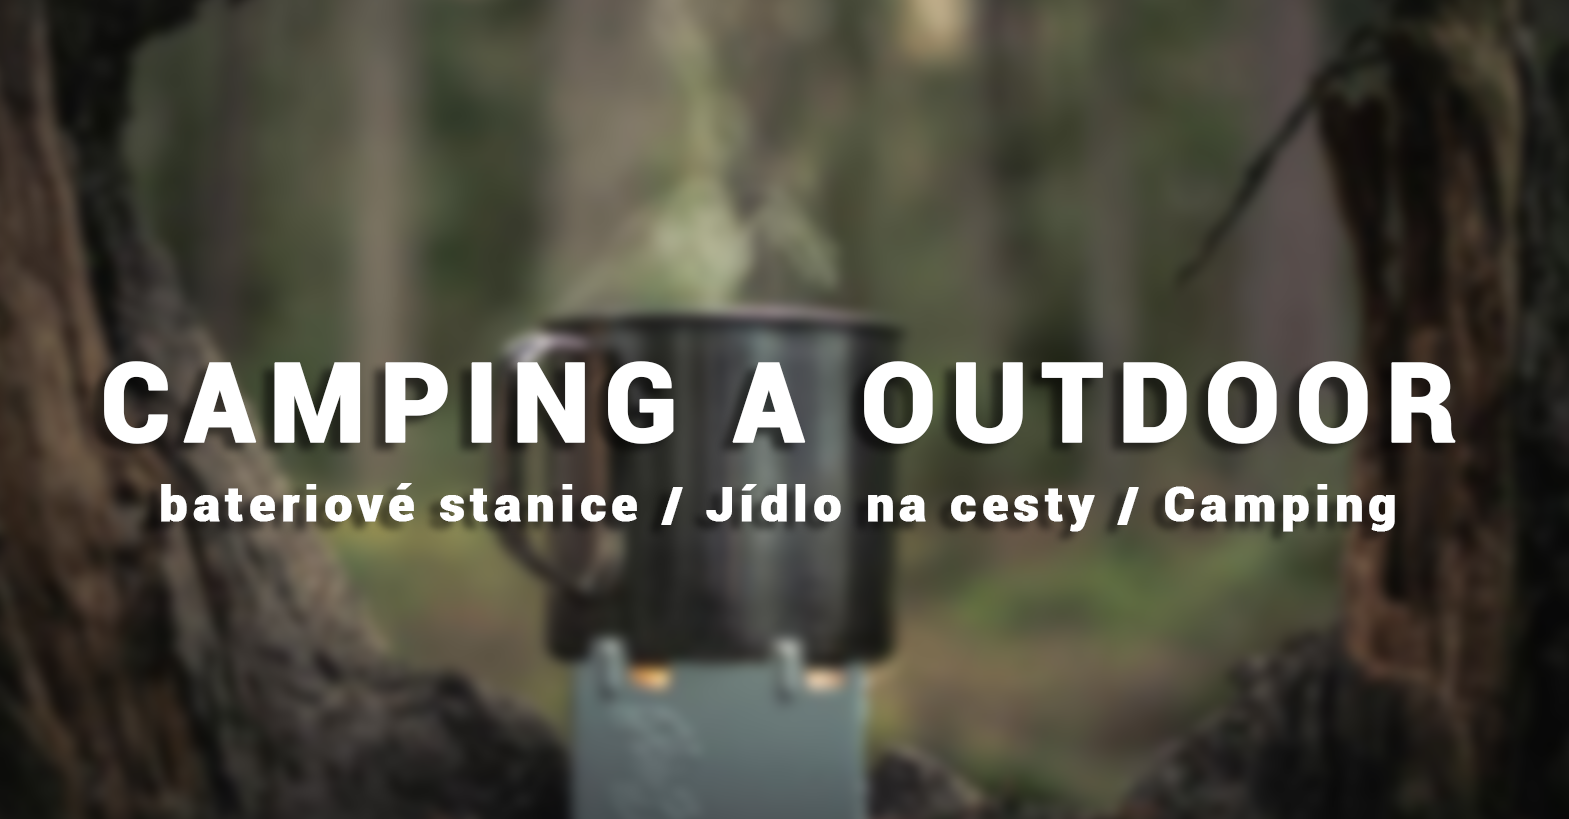 Camping a outdoor Ostrava, camping, jidlo na cesty